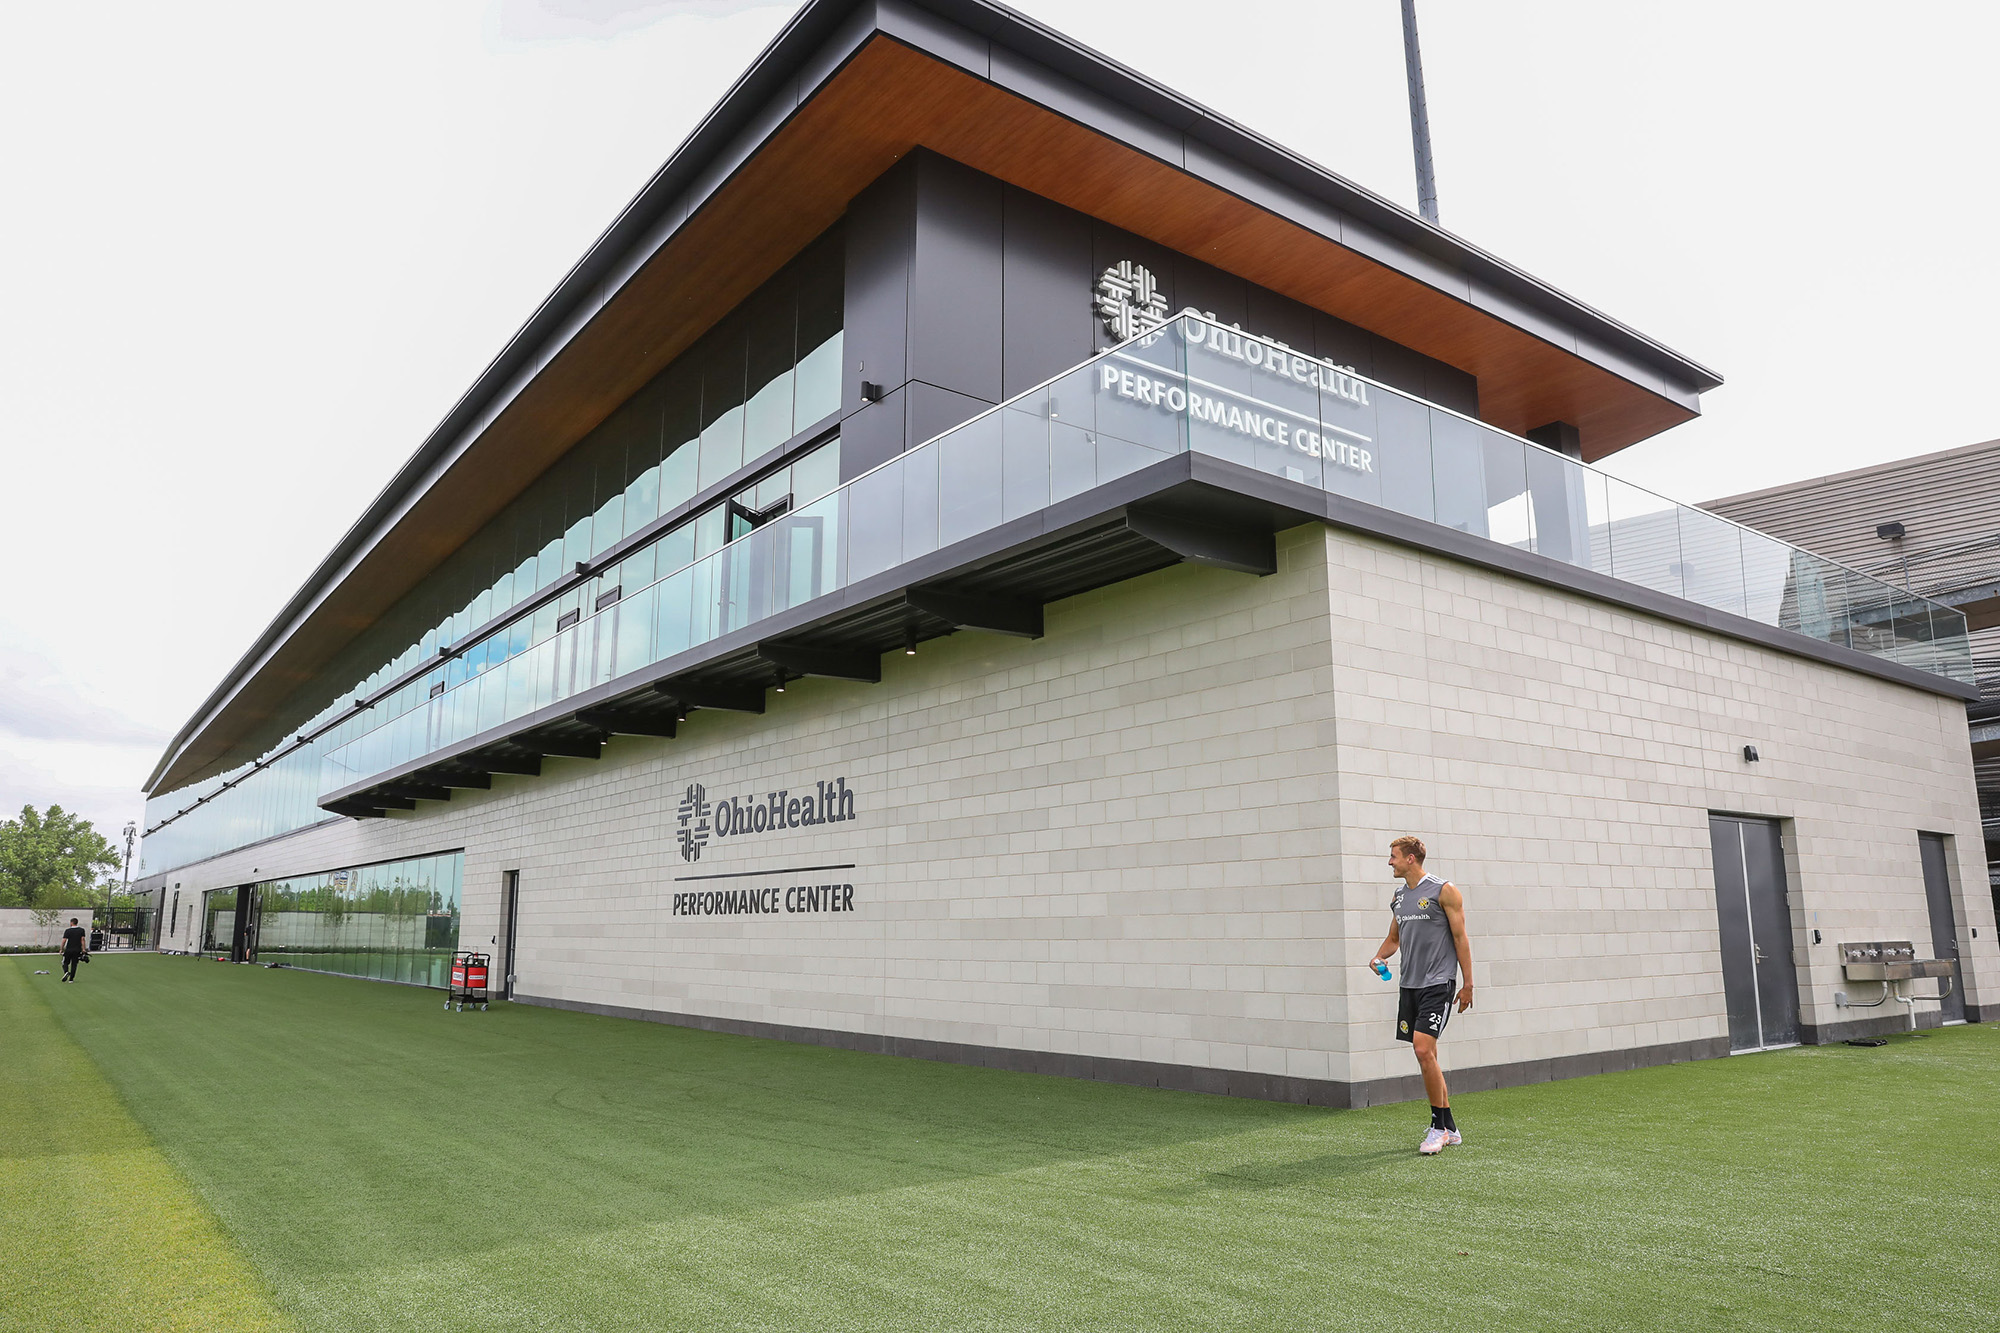 New Columbus Crew training center opens - Soccer Stadium Digest